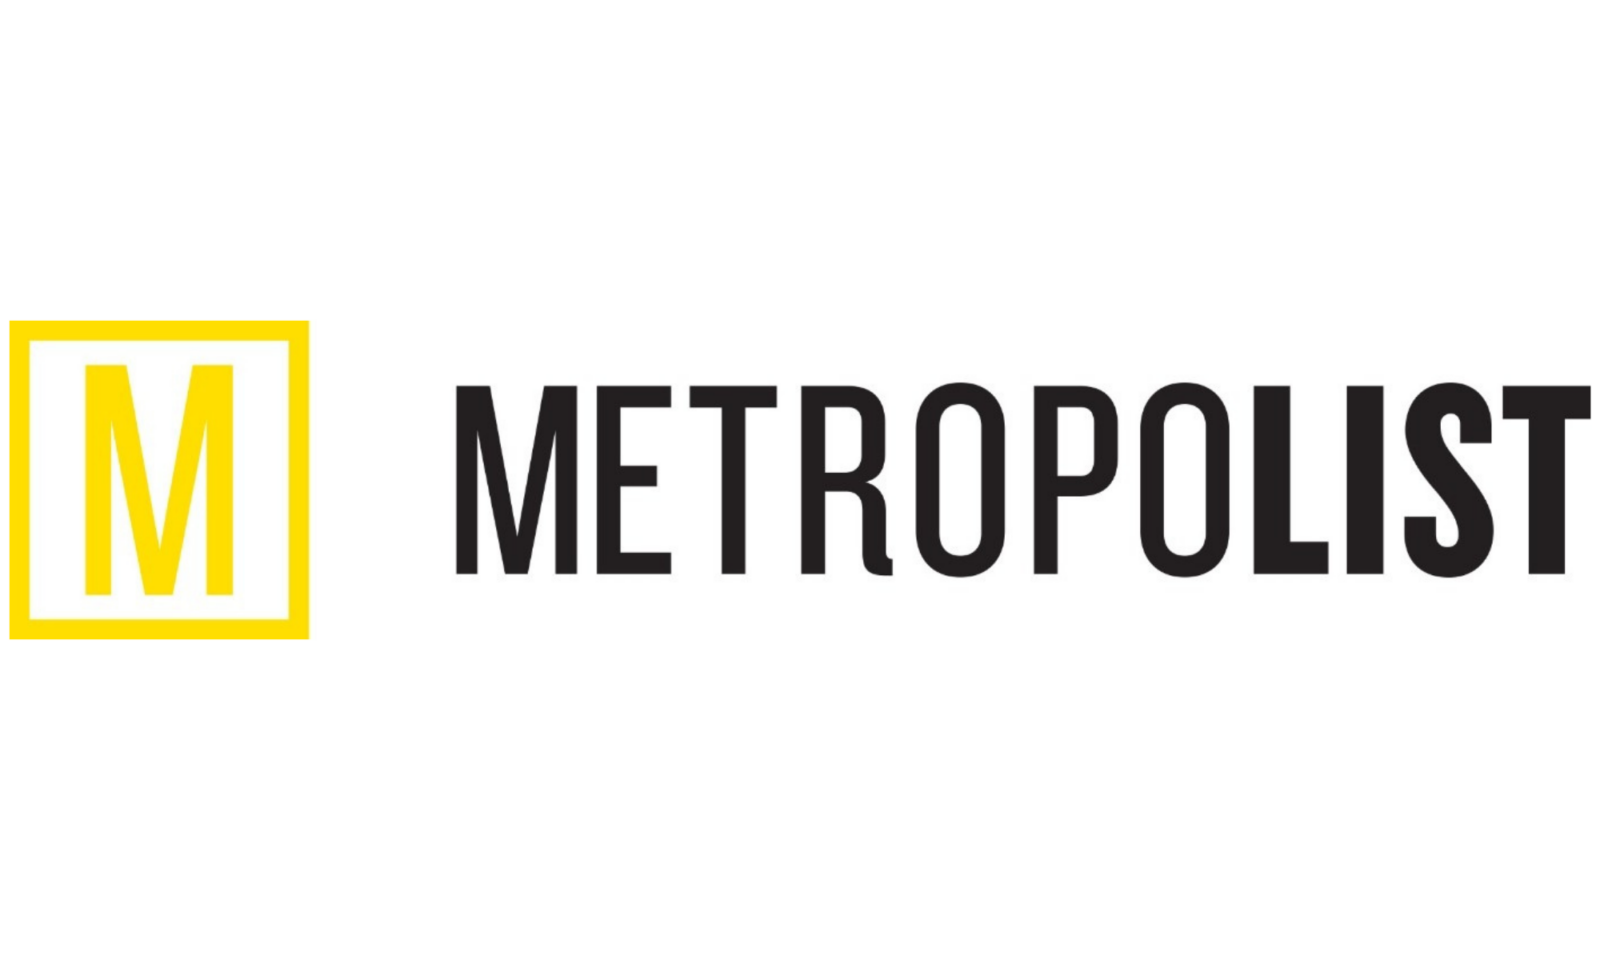 Metropolist